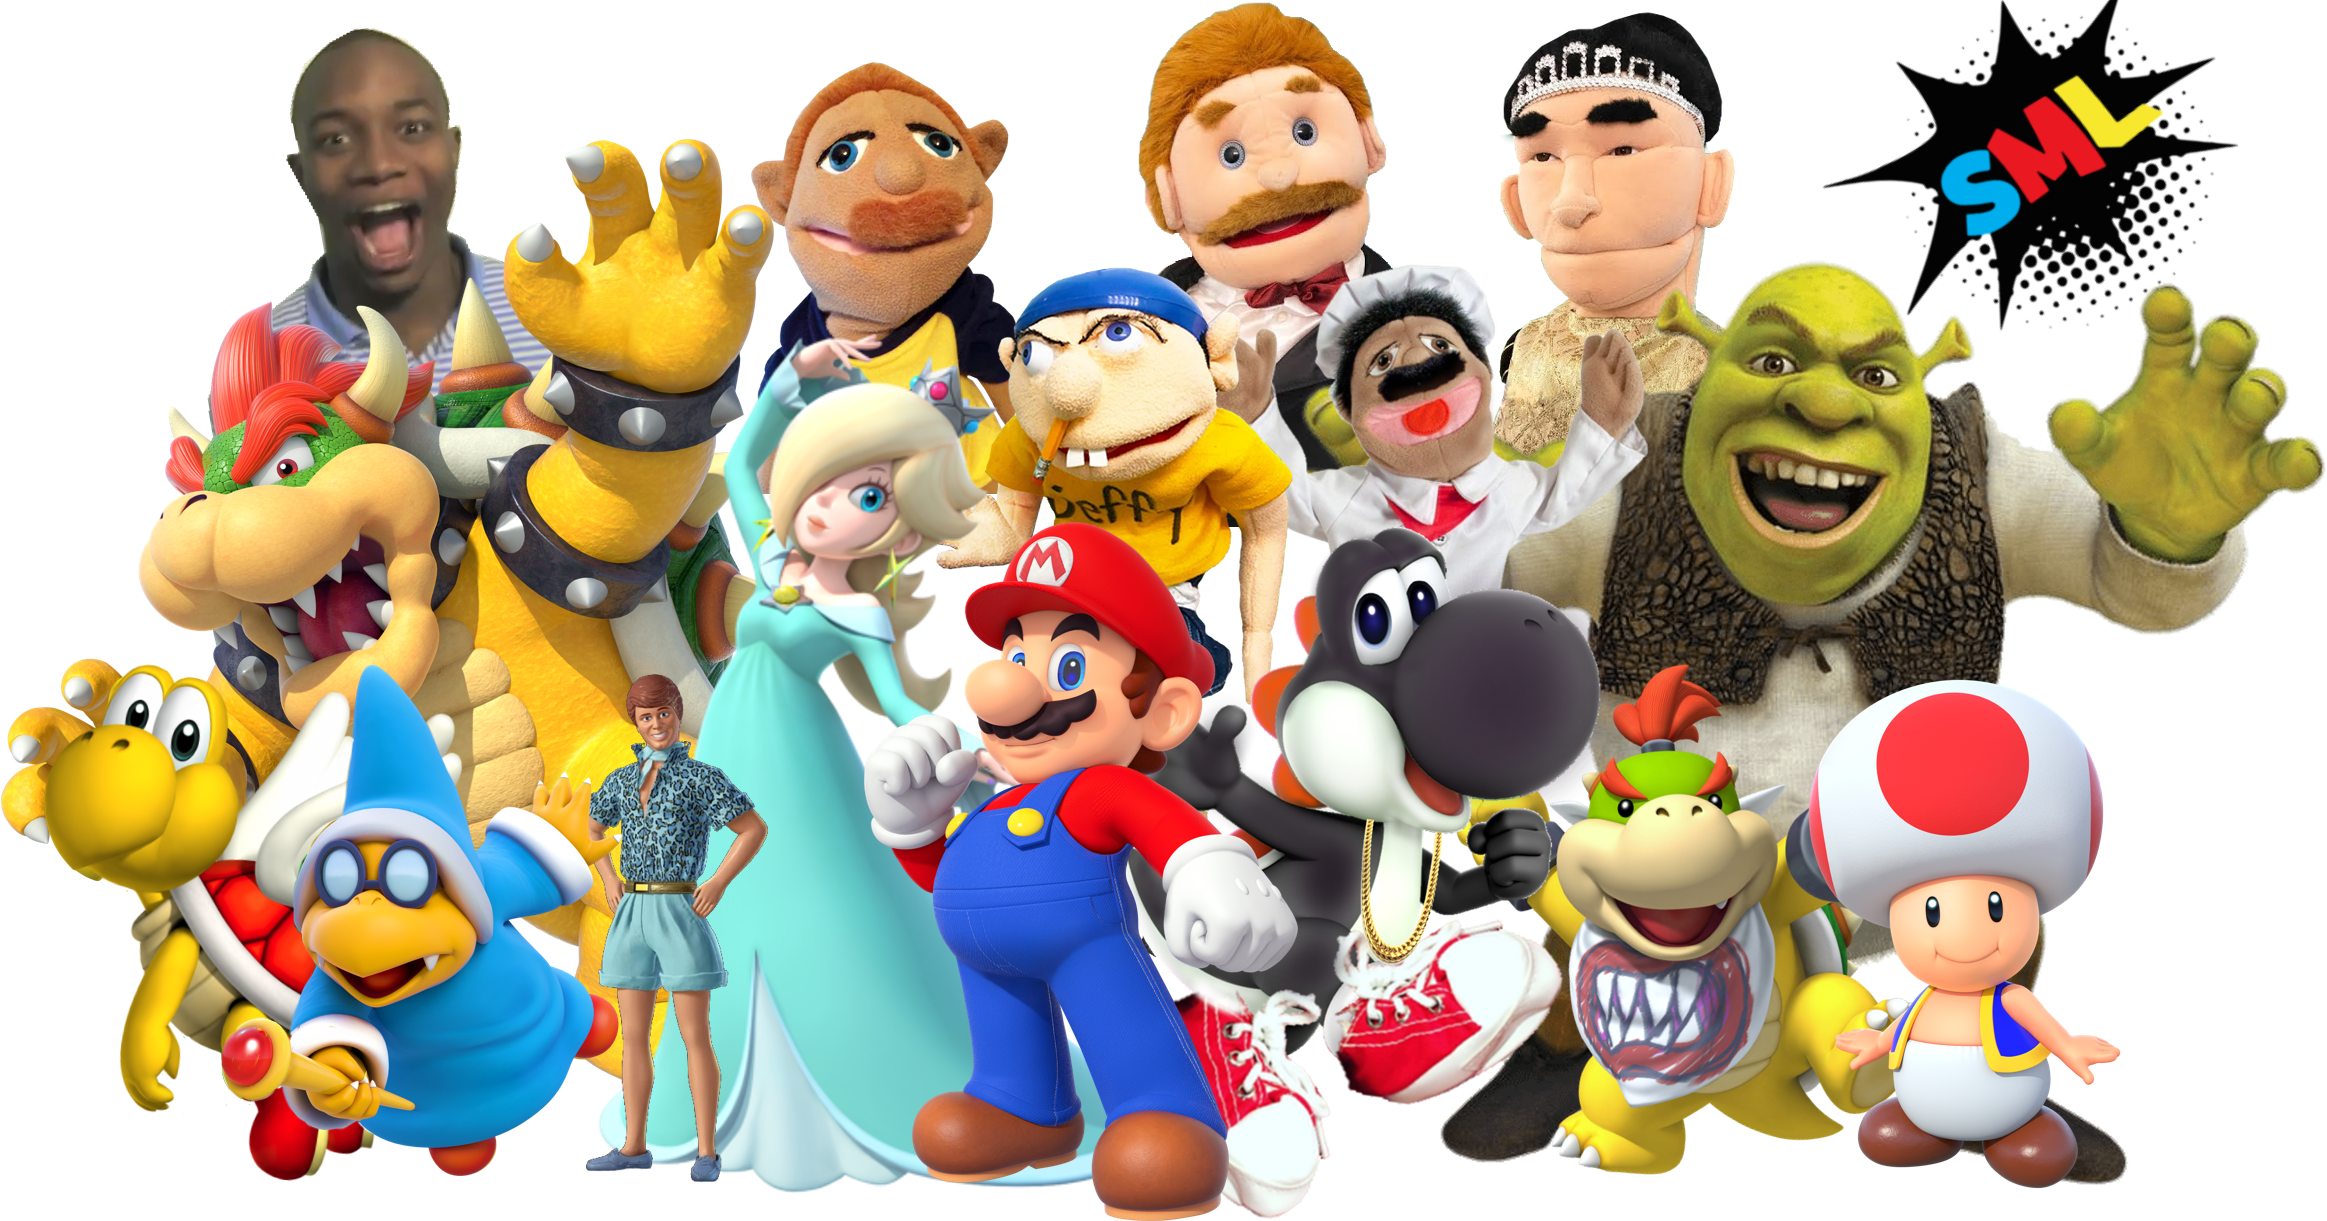 Mario & Luigi: Bowser's Inside Story (Video Game 2009) - Kenny James as  Bowser, Dark Bowser - IMDb